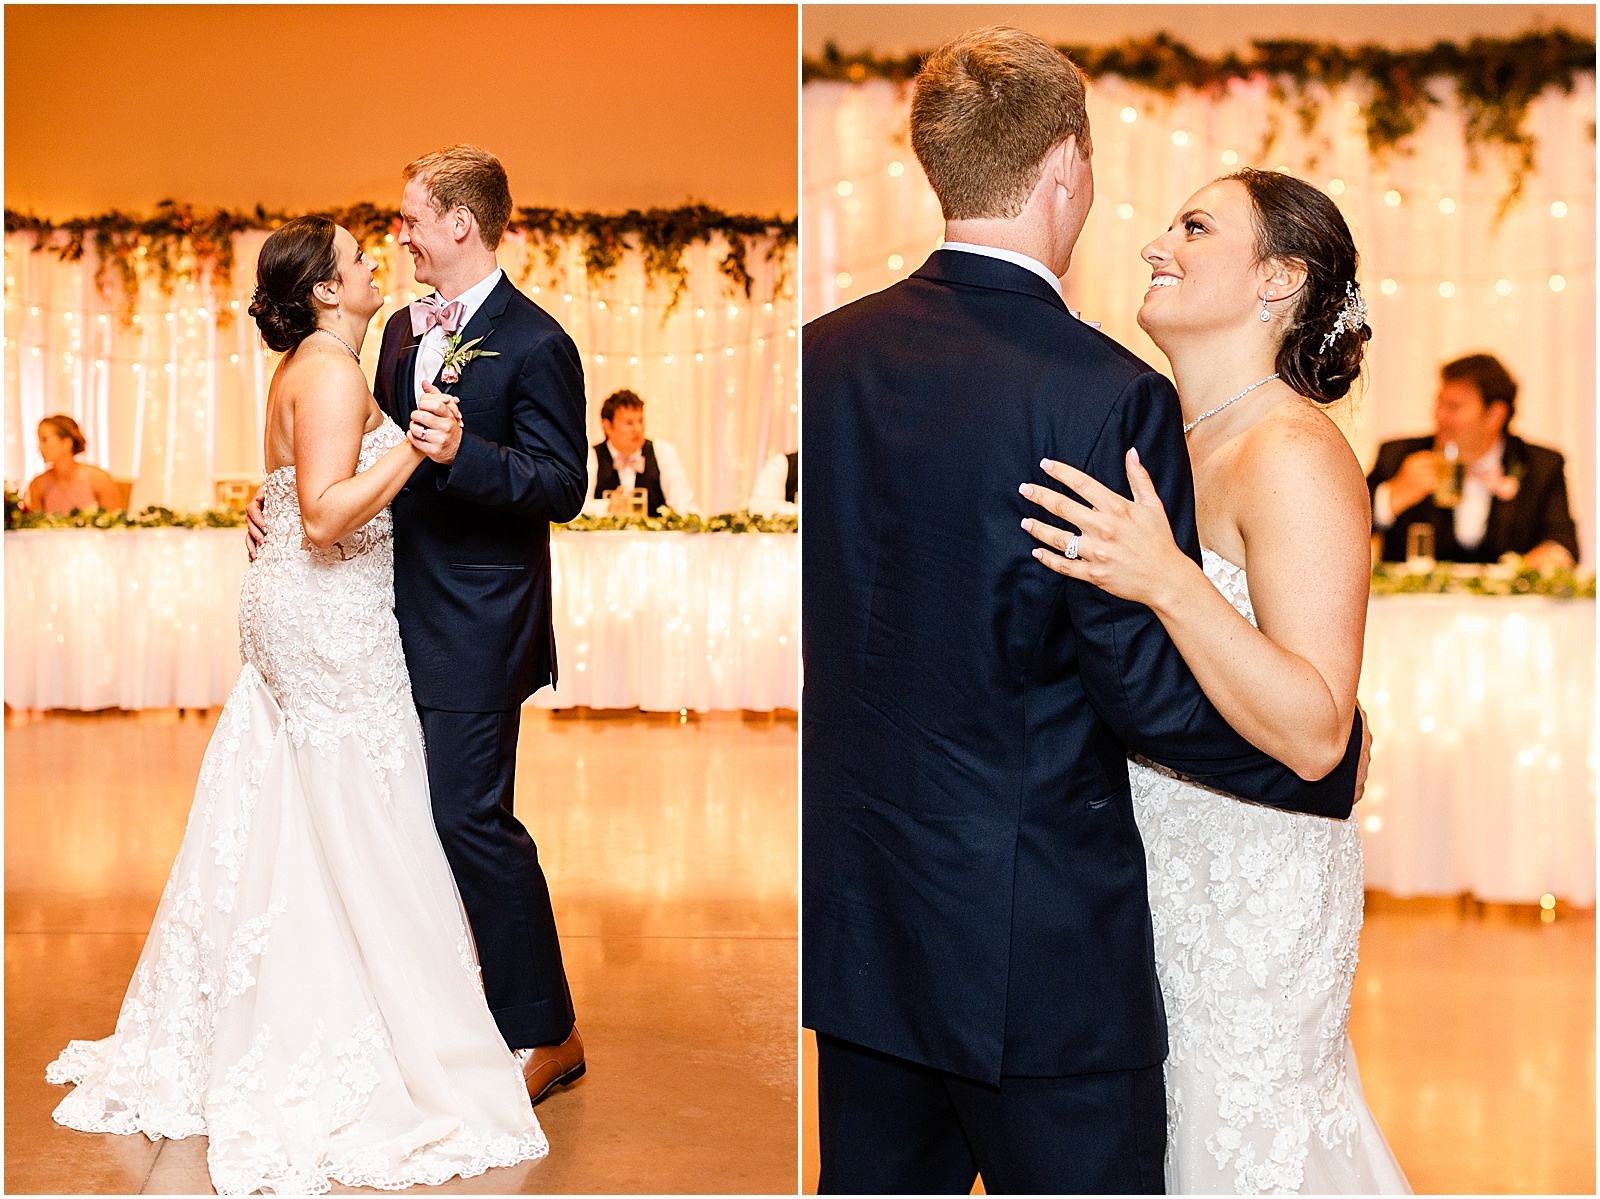 Deidra and Andrew | A Huntingburgh Indiana Wedding Bret and Brandie | Evansville Photographers | @bretandbrandie-0147.jpg